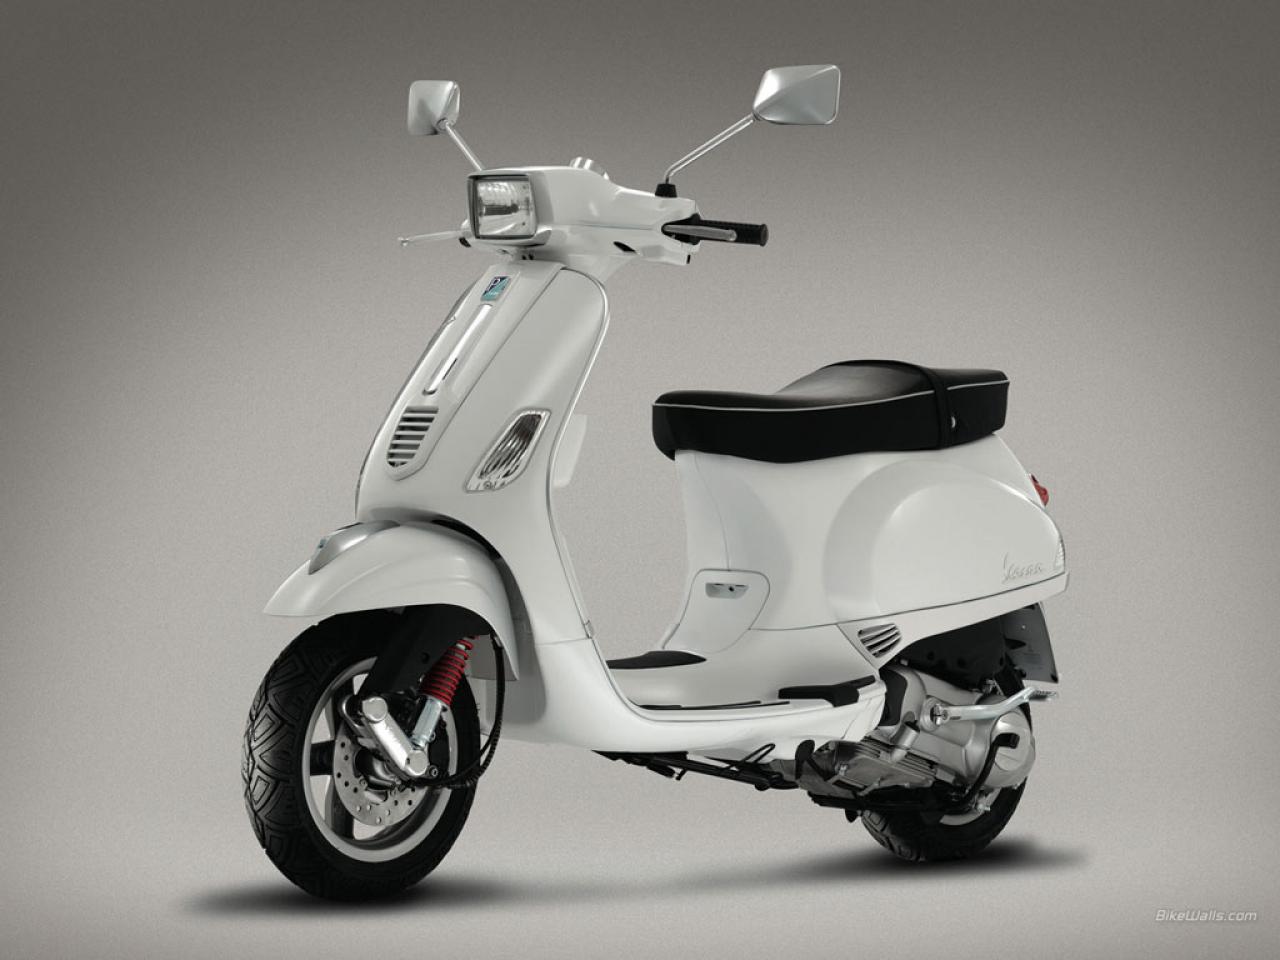 Ciao Vespino! - Vespa S125 3v i.e. launched at RM12,462.04 - Motorcycle ...